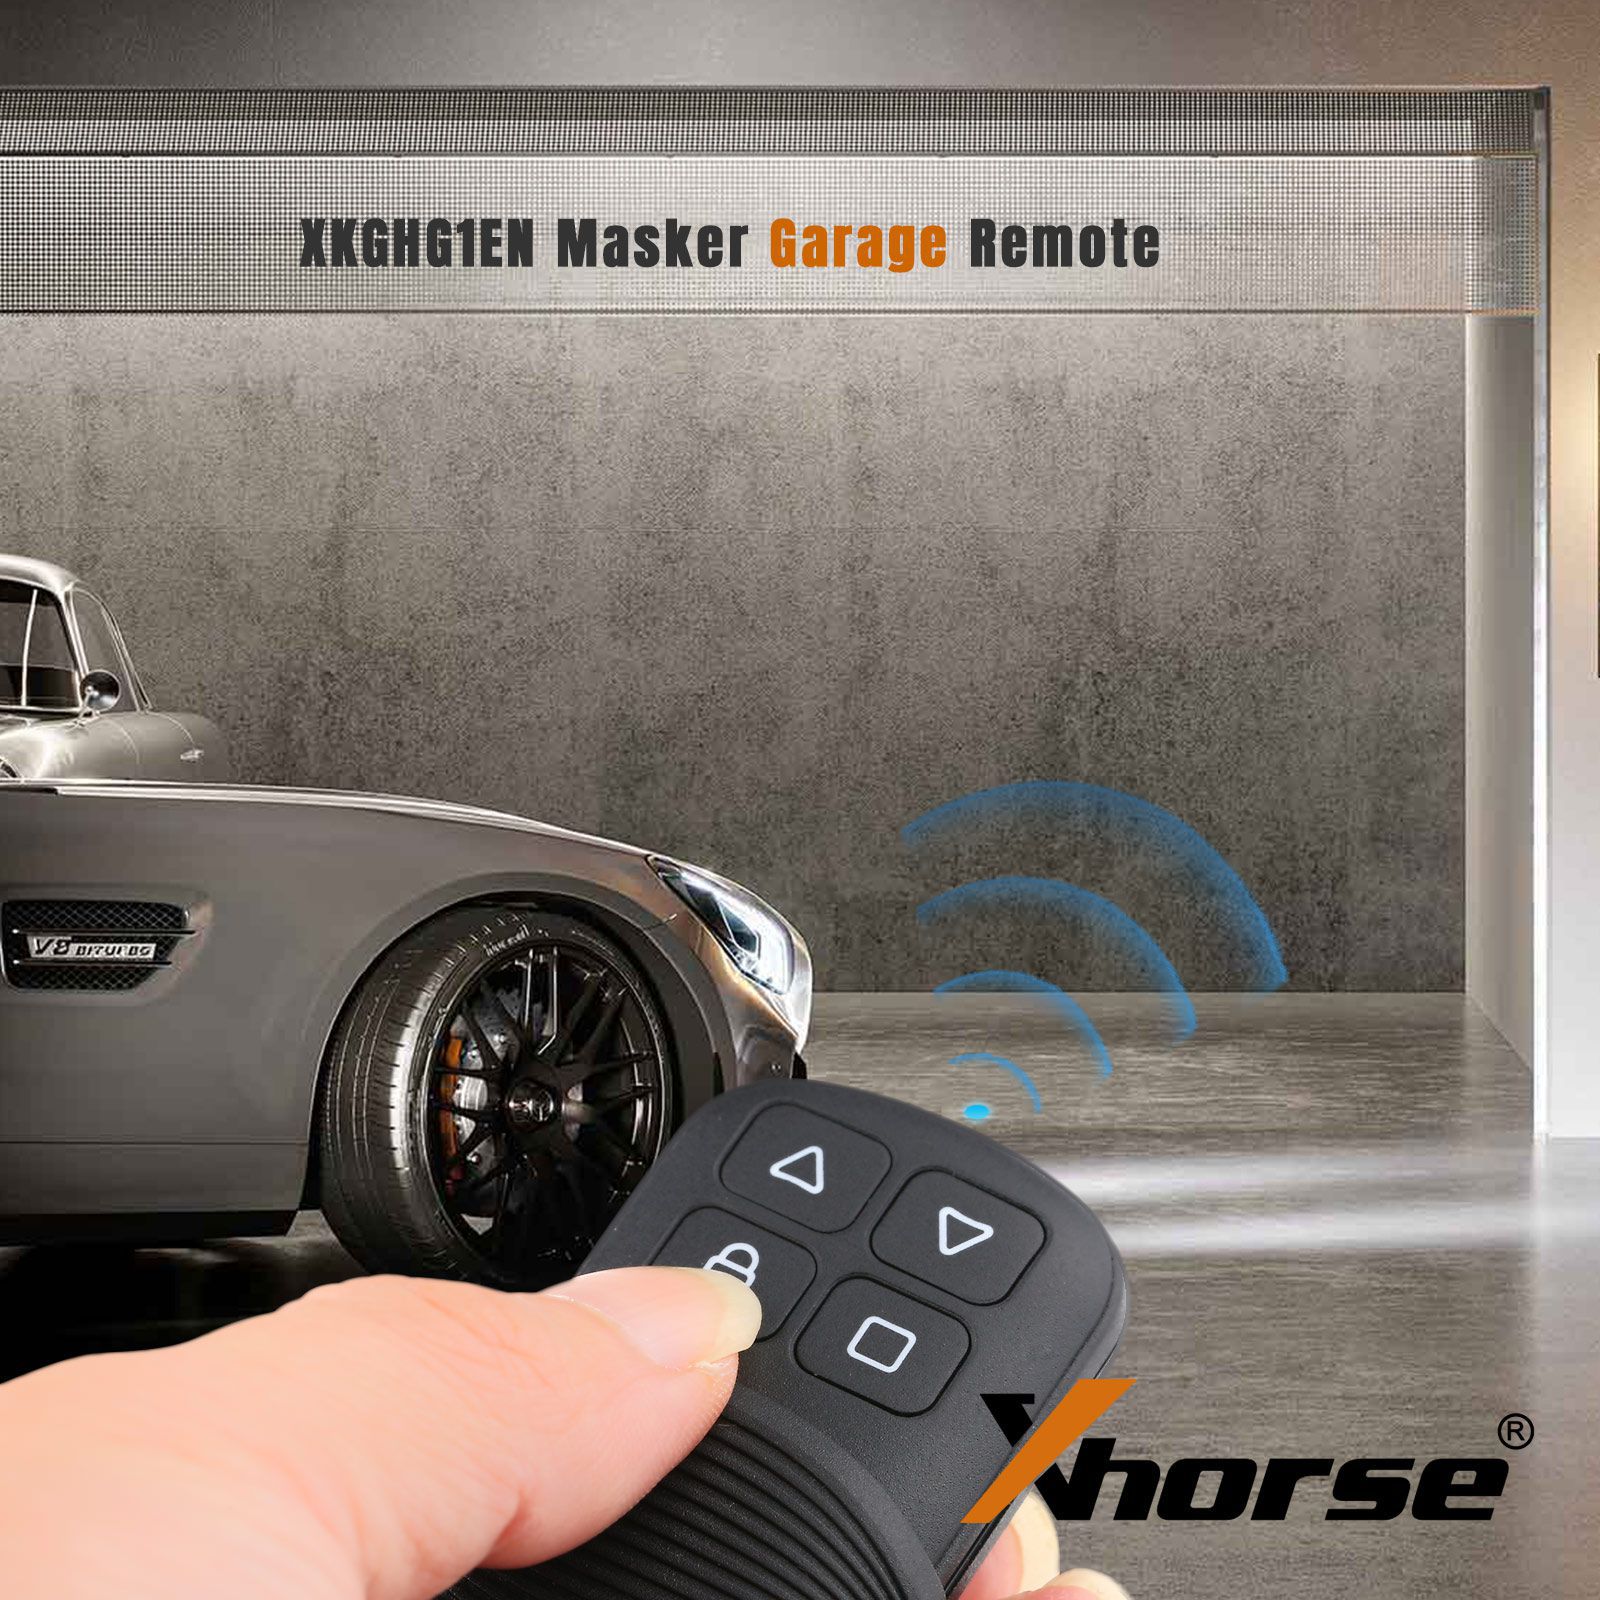 2023 Neueste Xhorse XKGHG1EN Masker Garage Remote 5pcs/lot